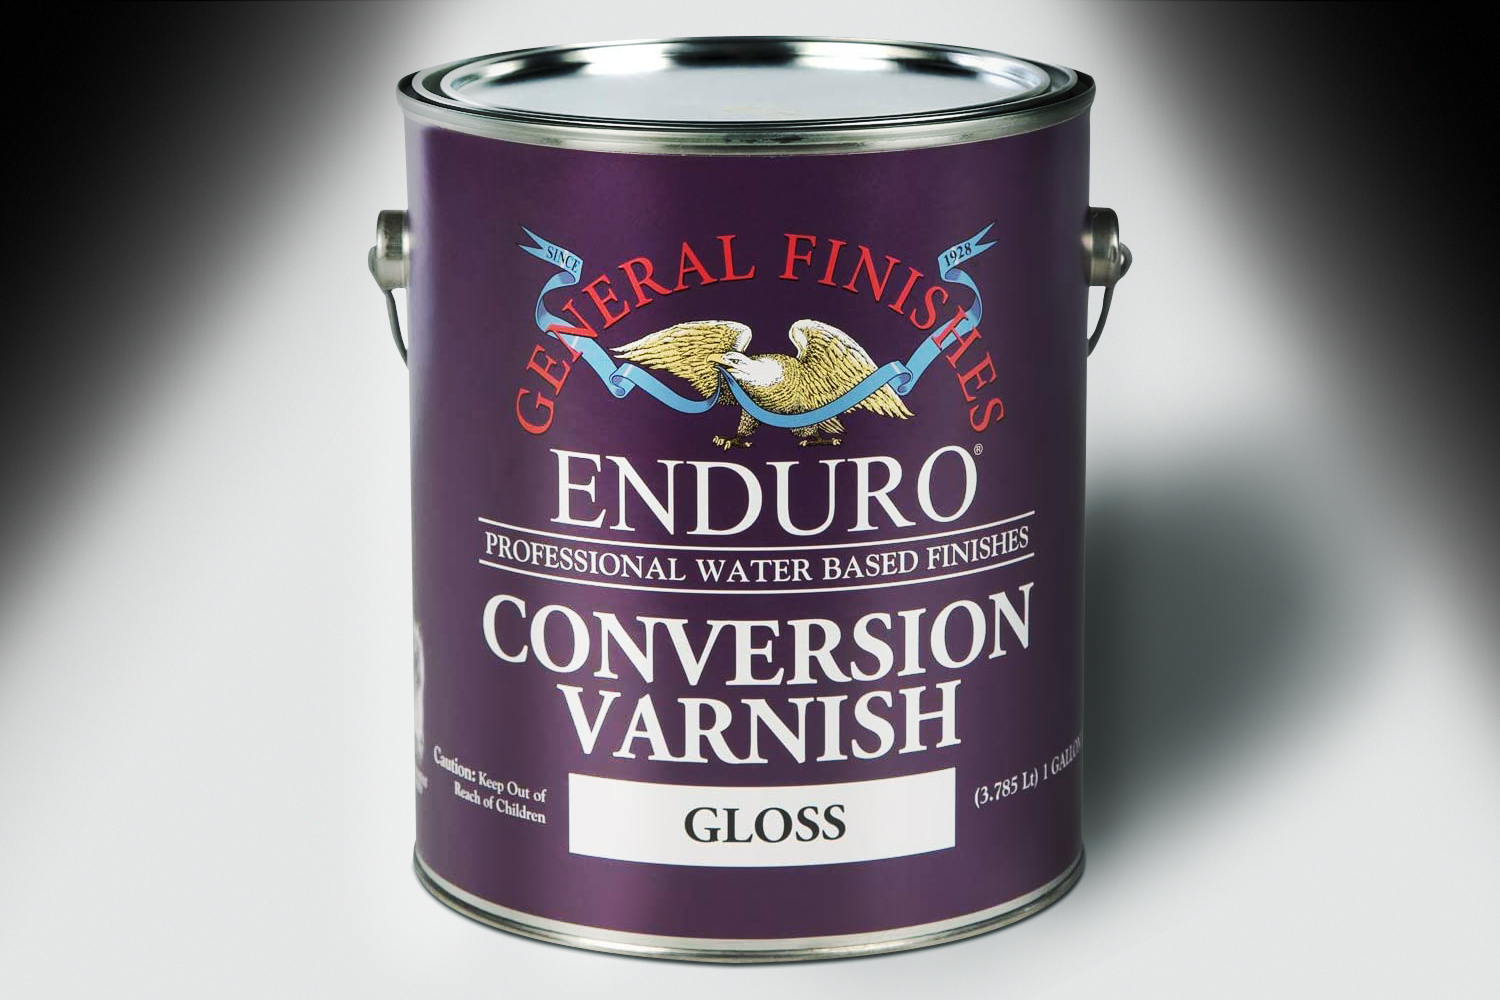 General Finishes Enduro Conversion Varnish Gloss Gallon